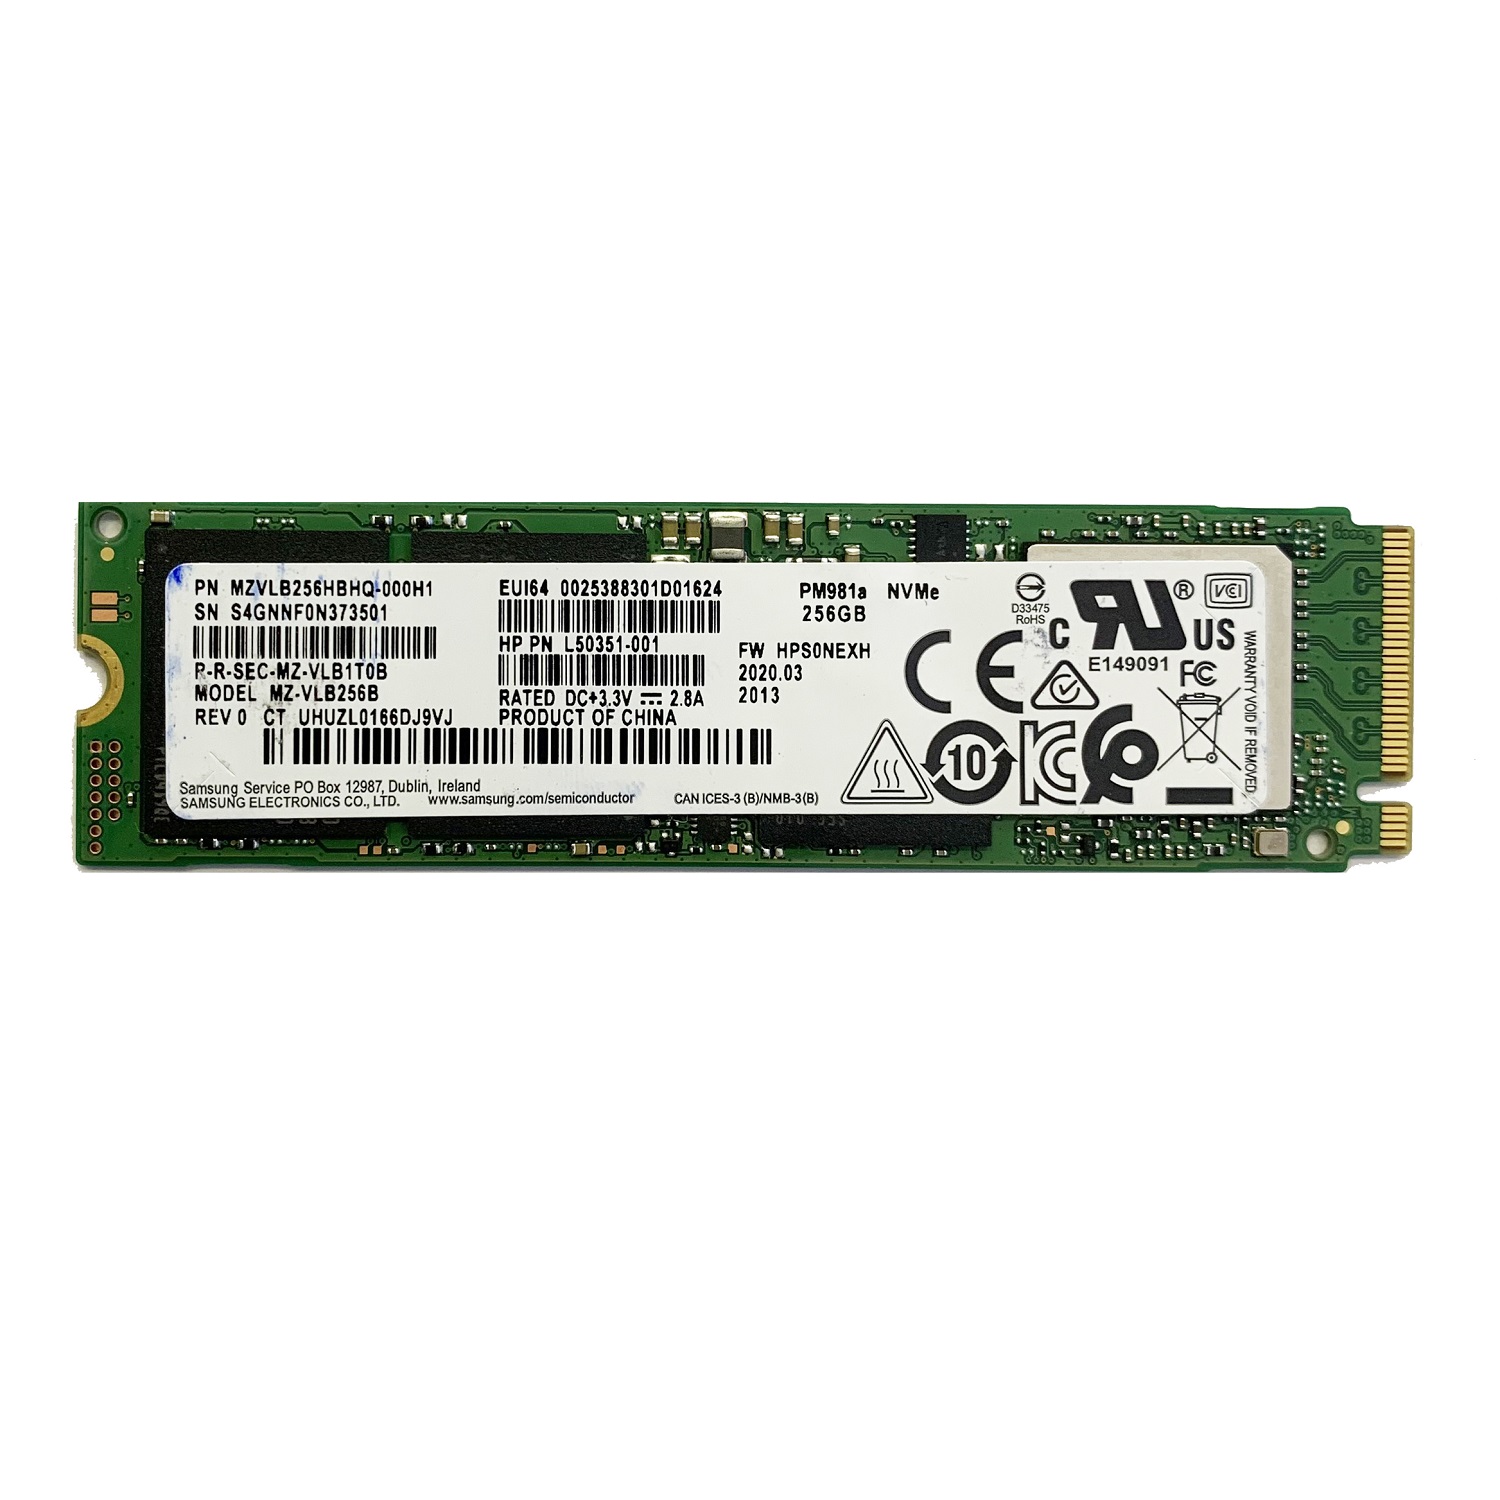 SSD Samsung NVMe PM981A M.2 PCIe 256Gb